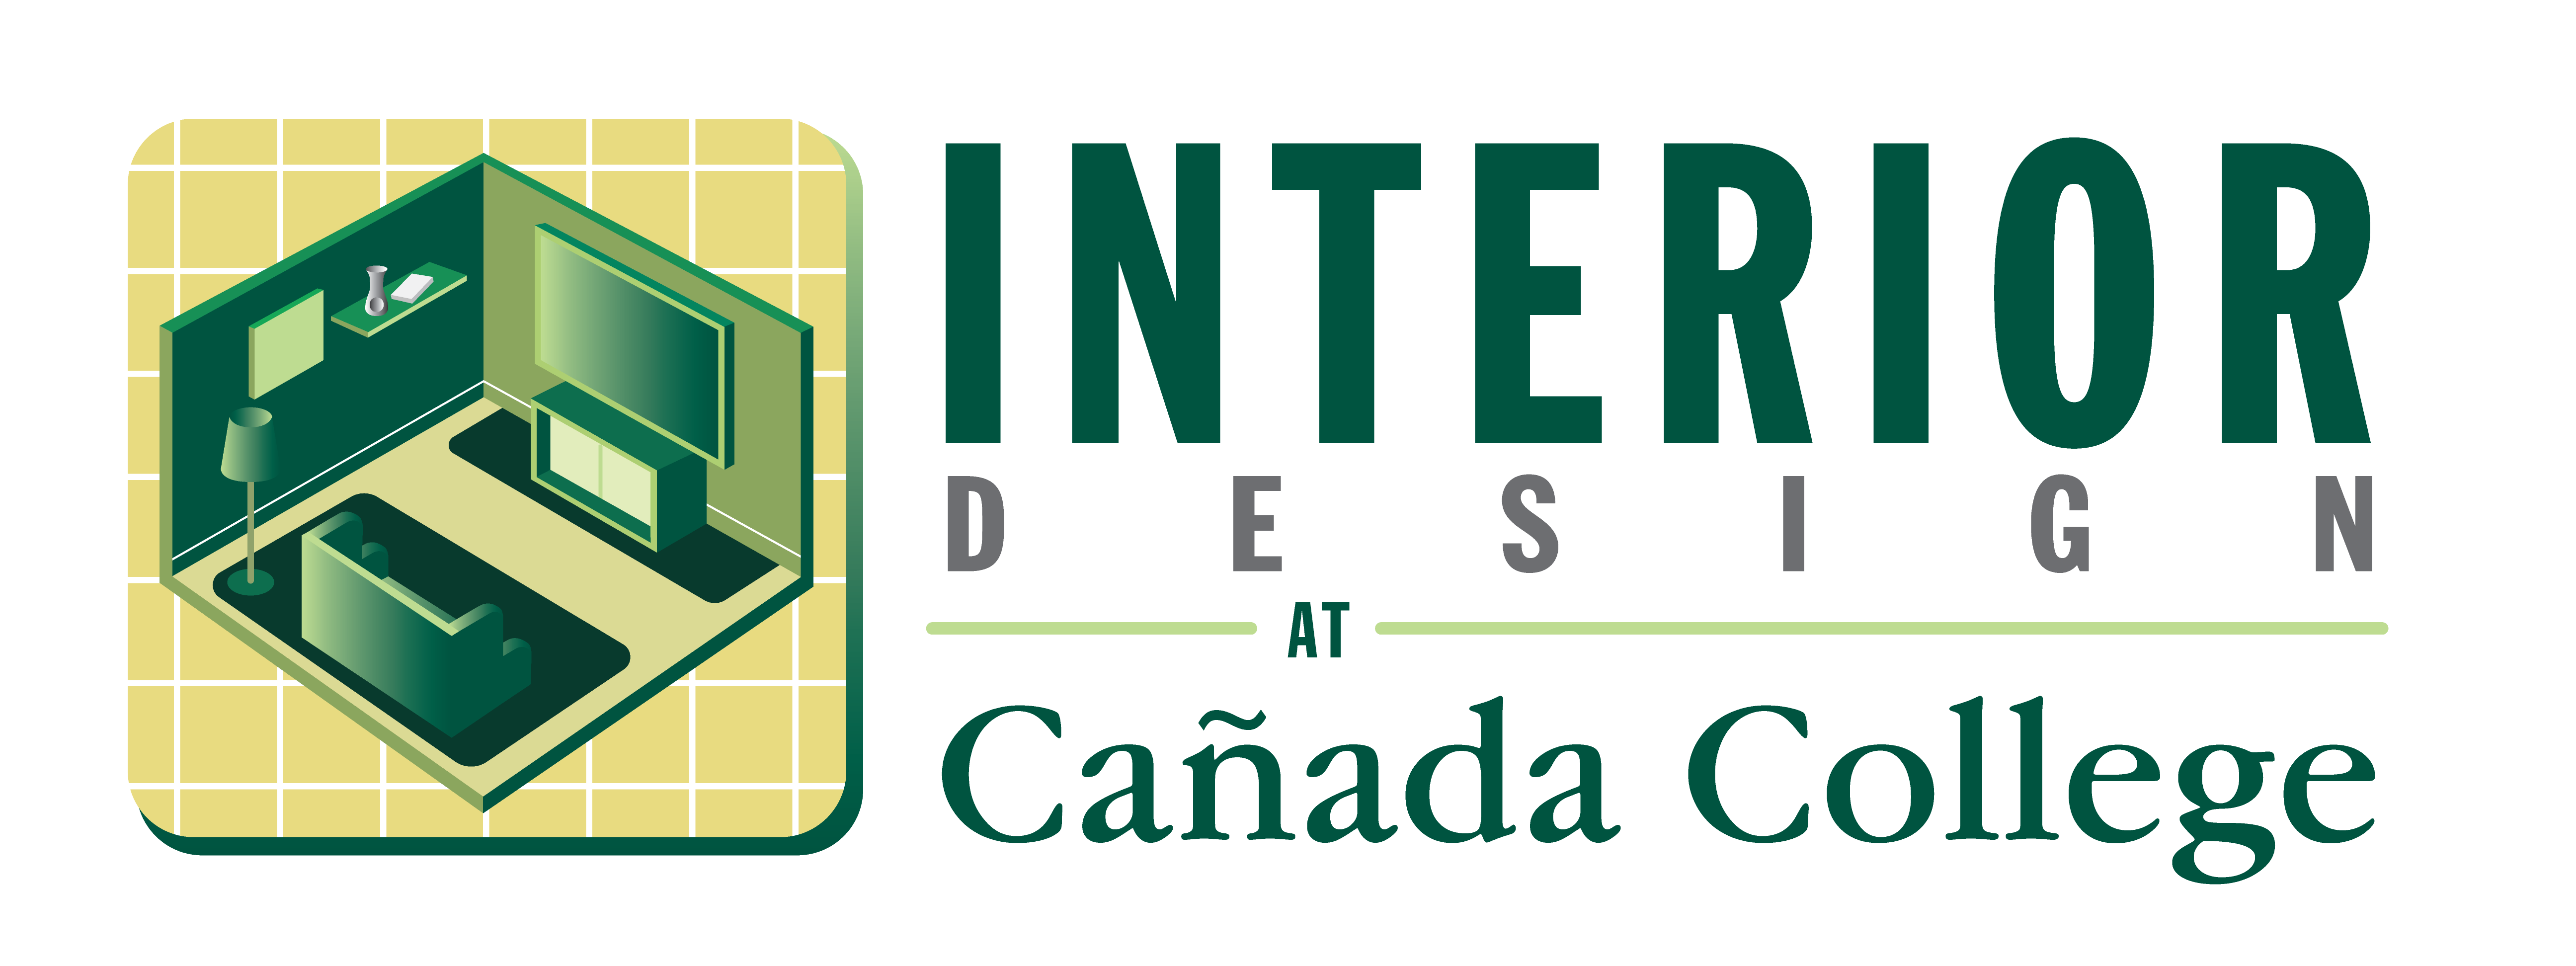 InteriorD Logo Bdw Green 2018 01 